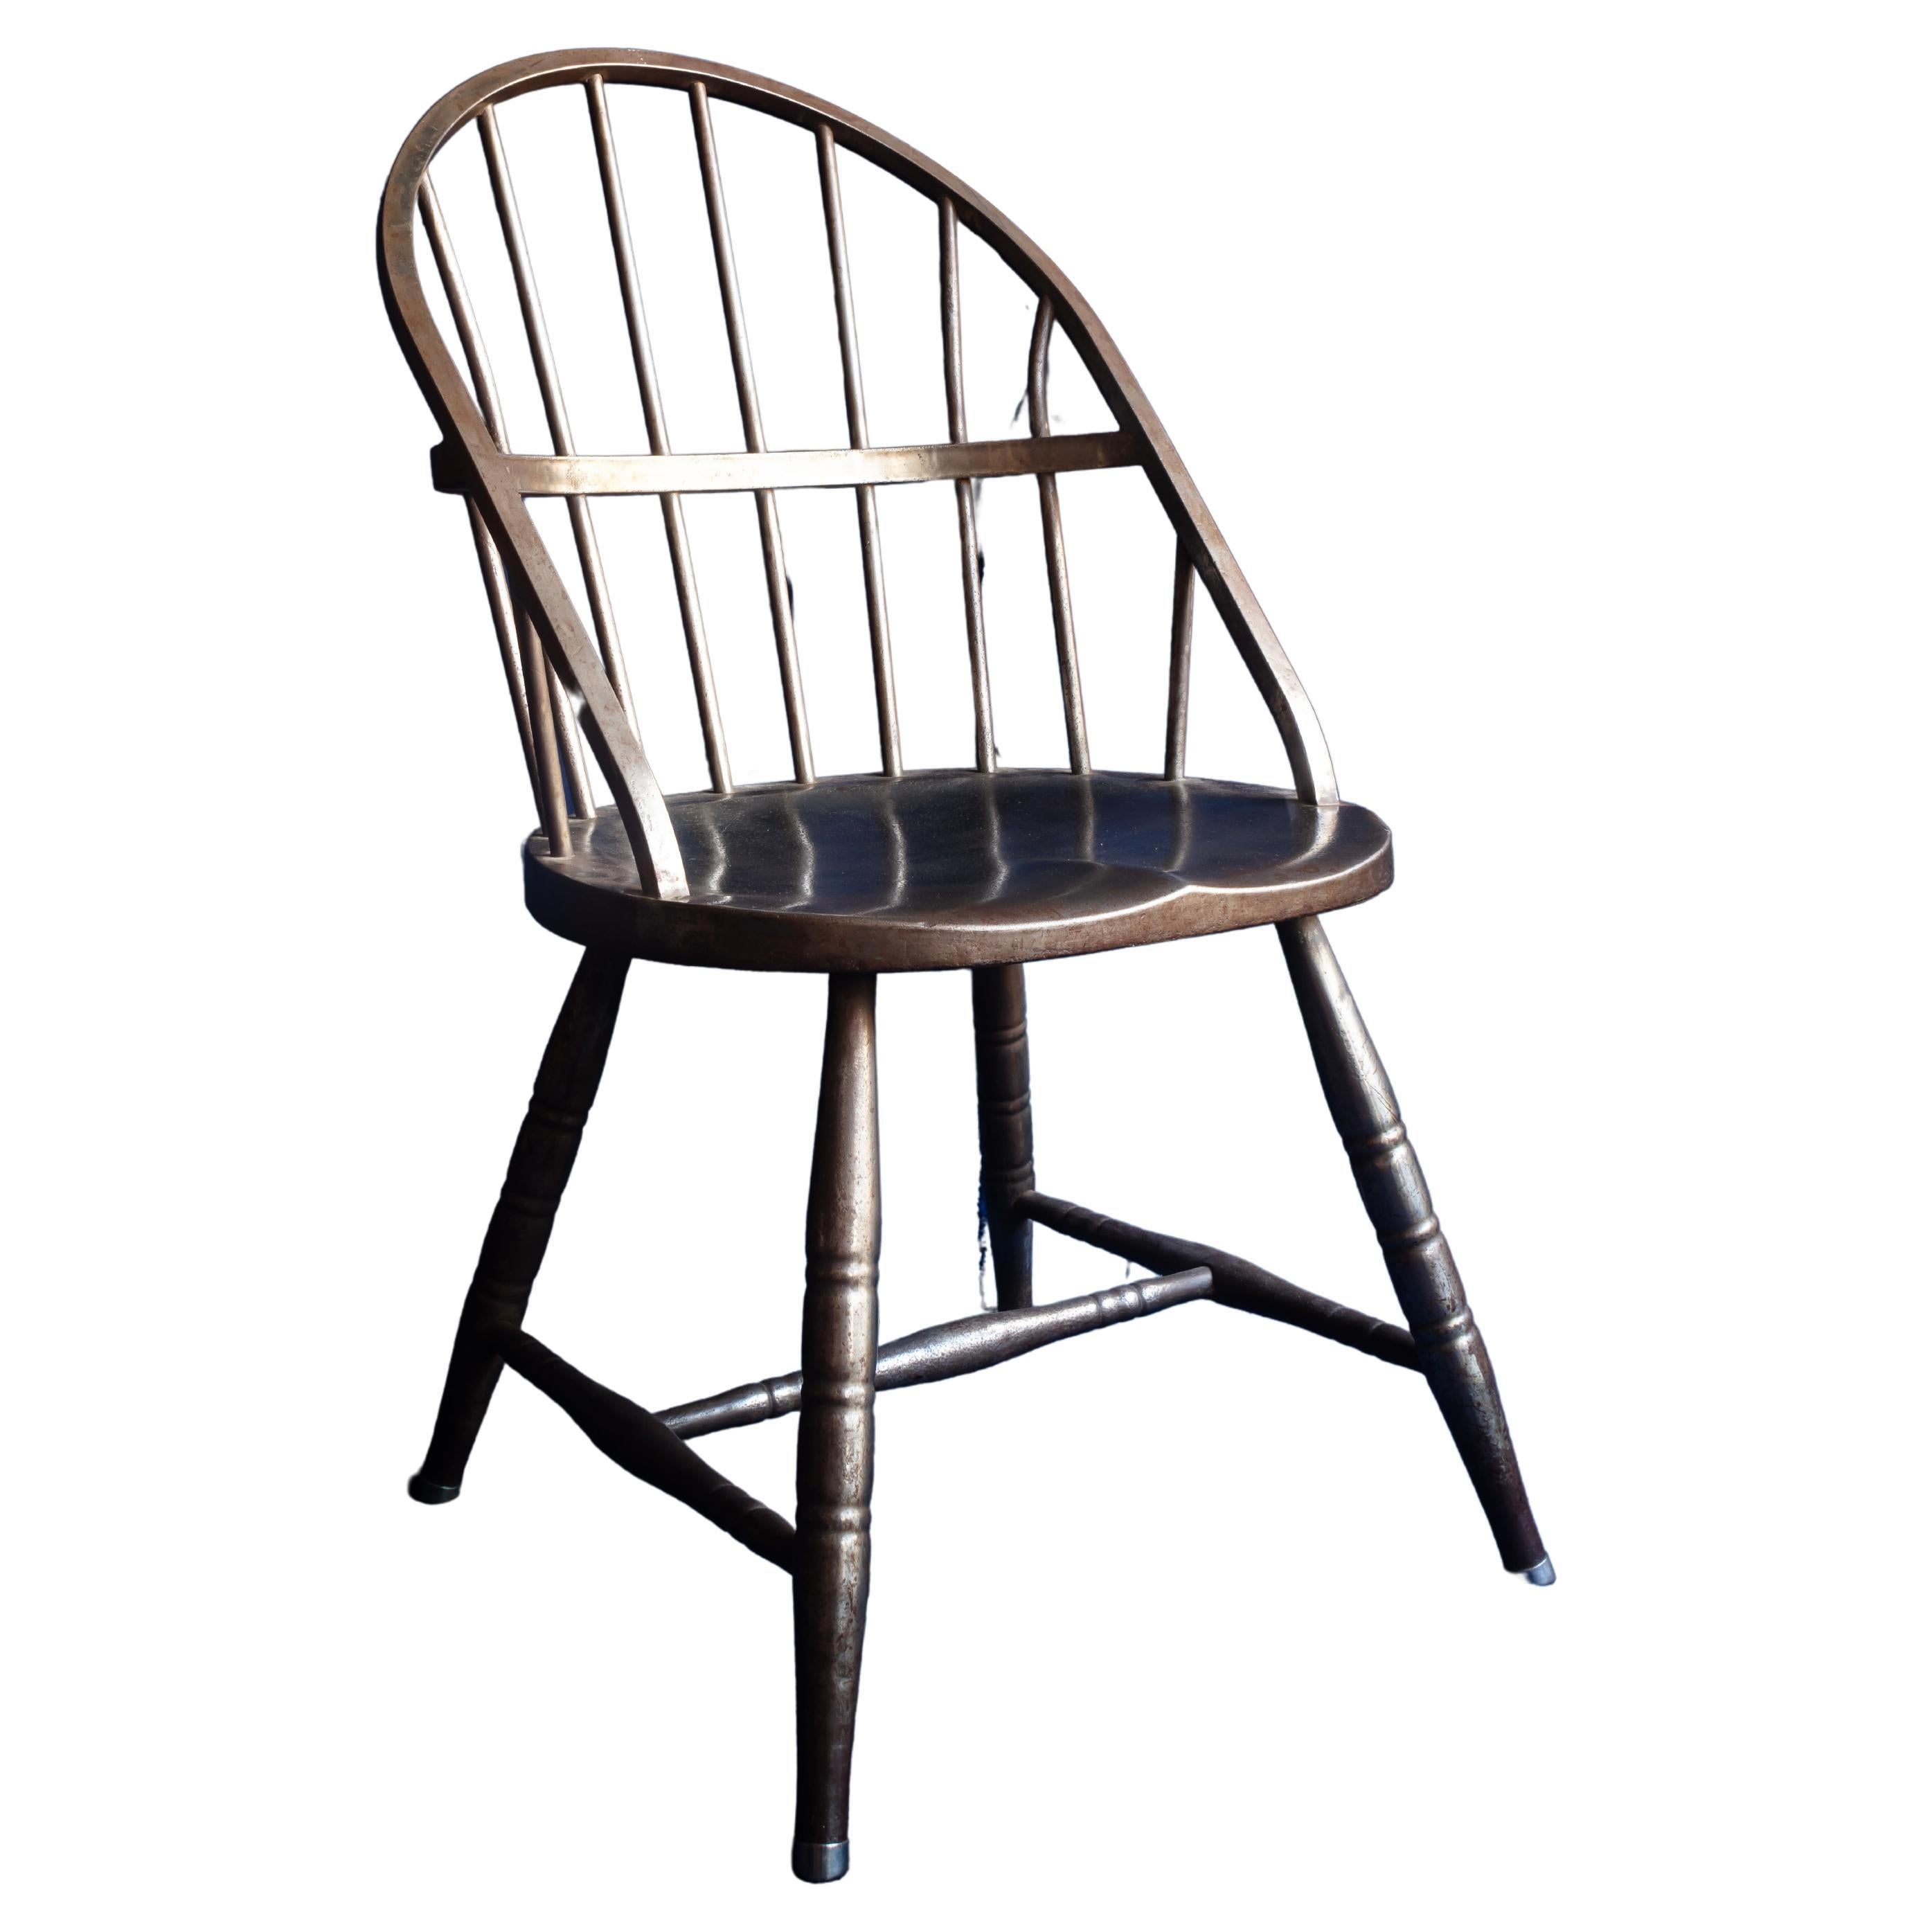 Steel Windsor style chair. New York, 1920s